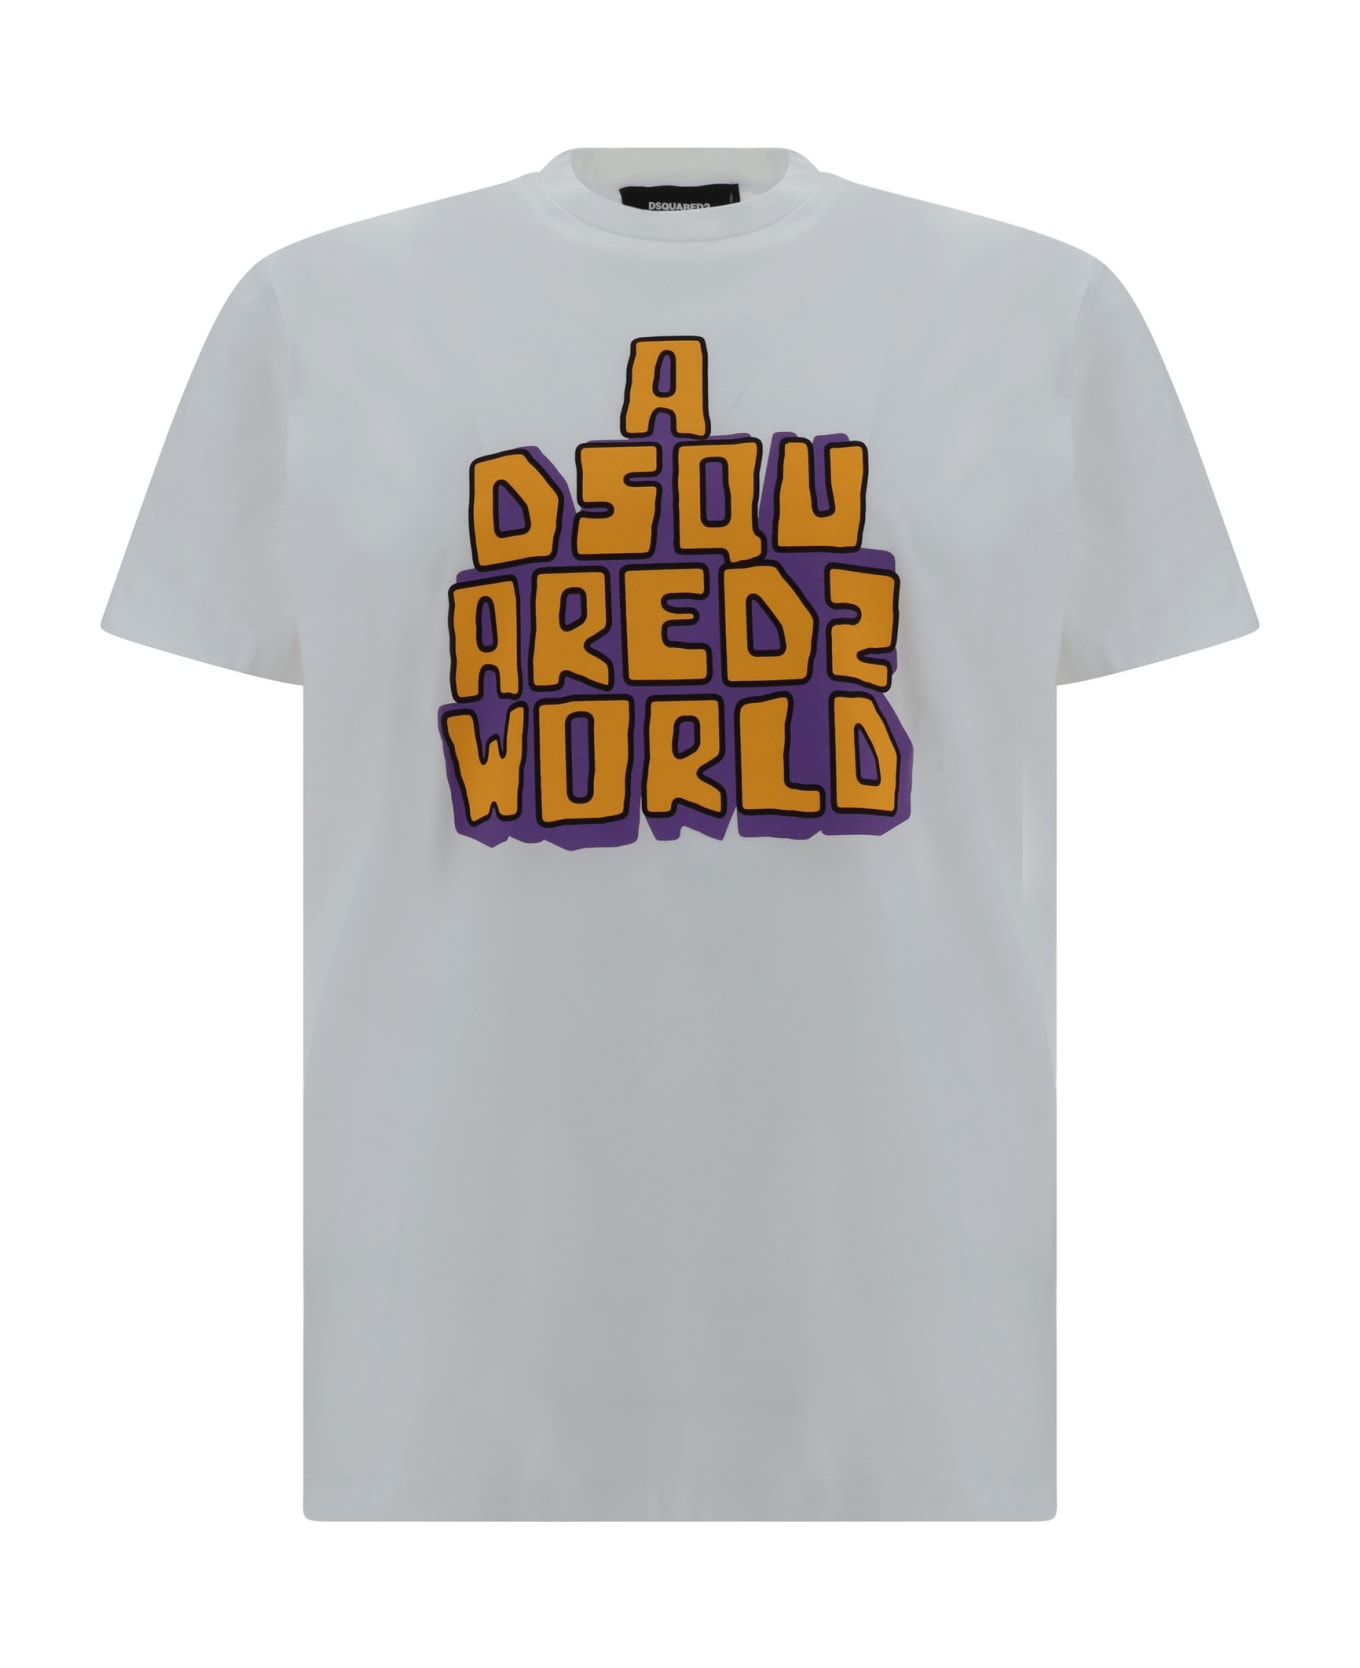 Dsquared2 T-shirt - 100